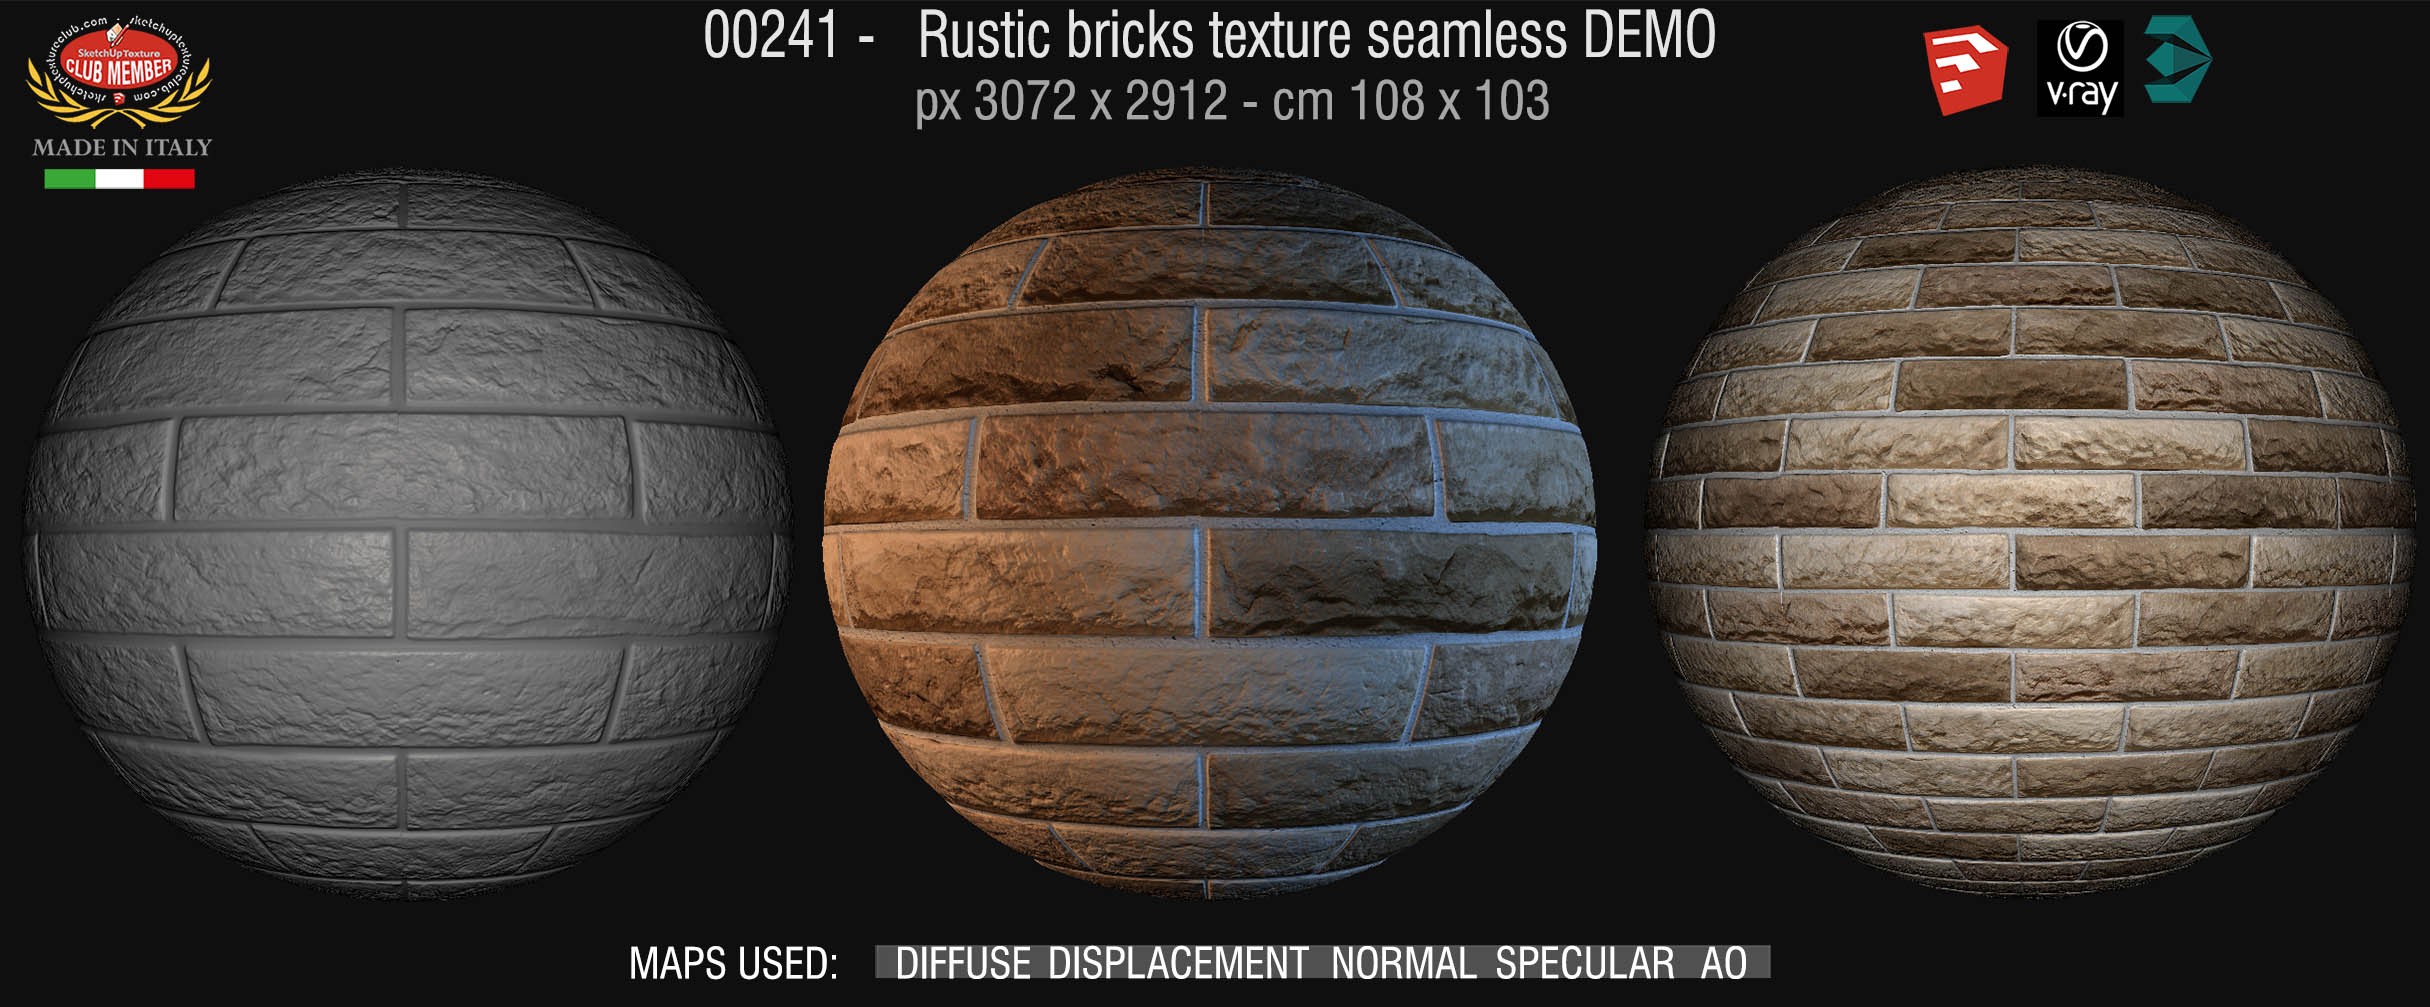 00241 Rustic bricks texture seamless + maps DEMO